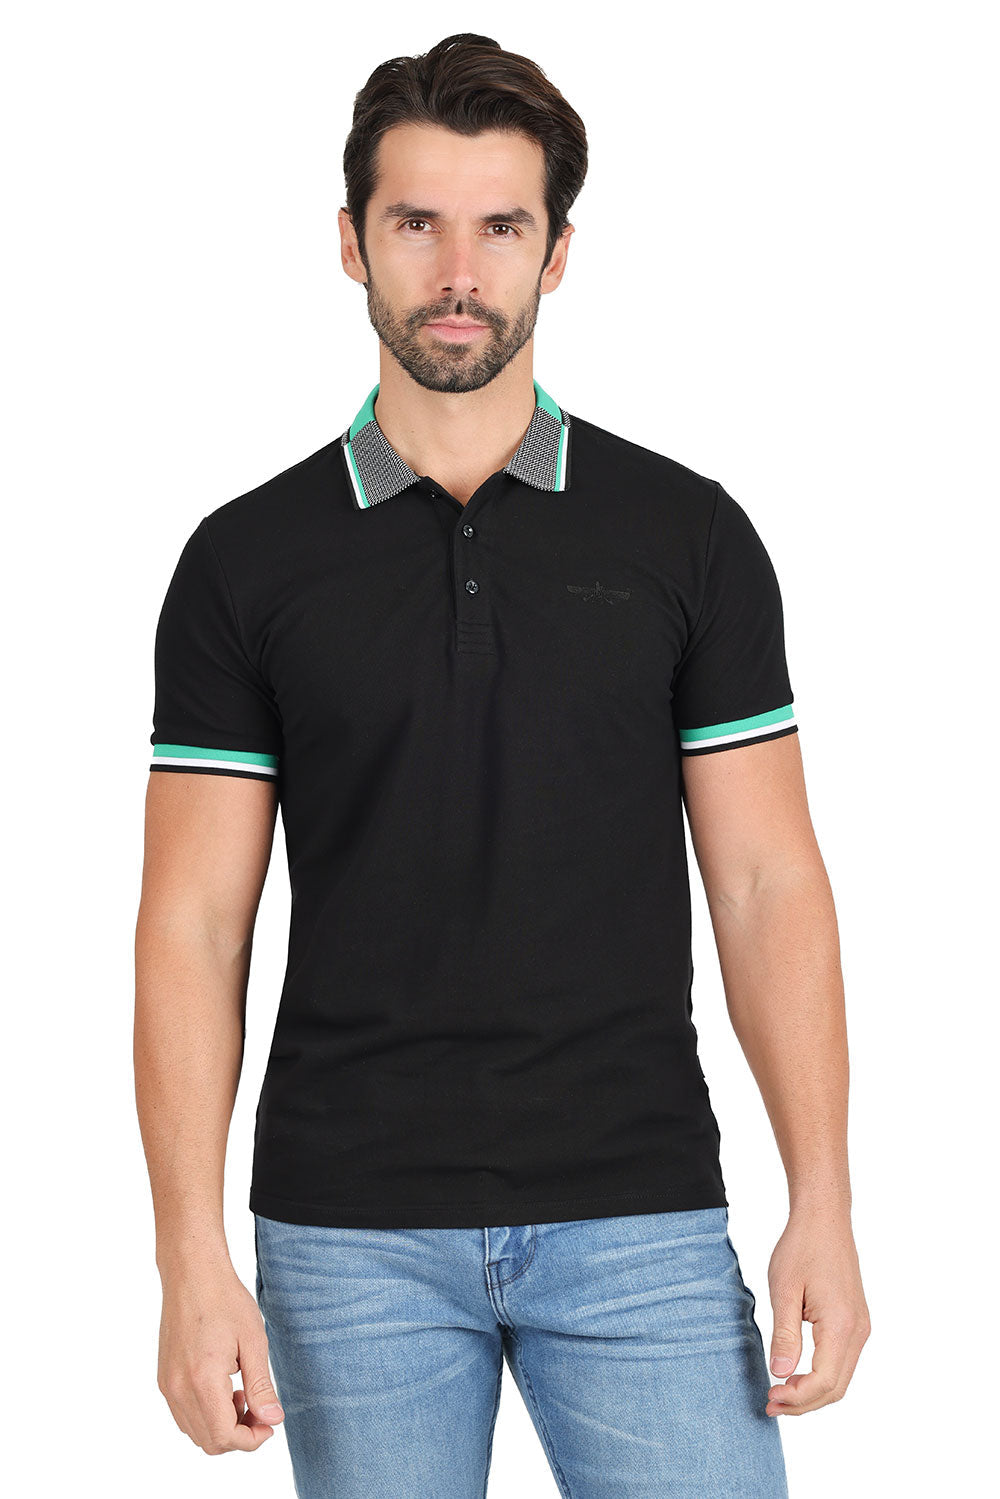 BARABAS Men's Premium Solid Color Short Sleeve Polo shirts 3PP839 Black Green